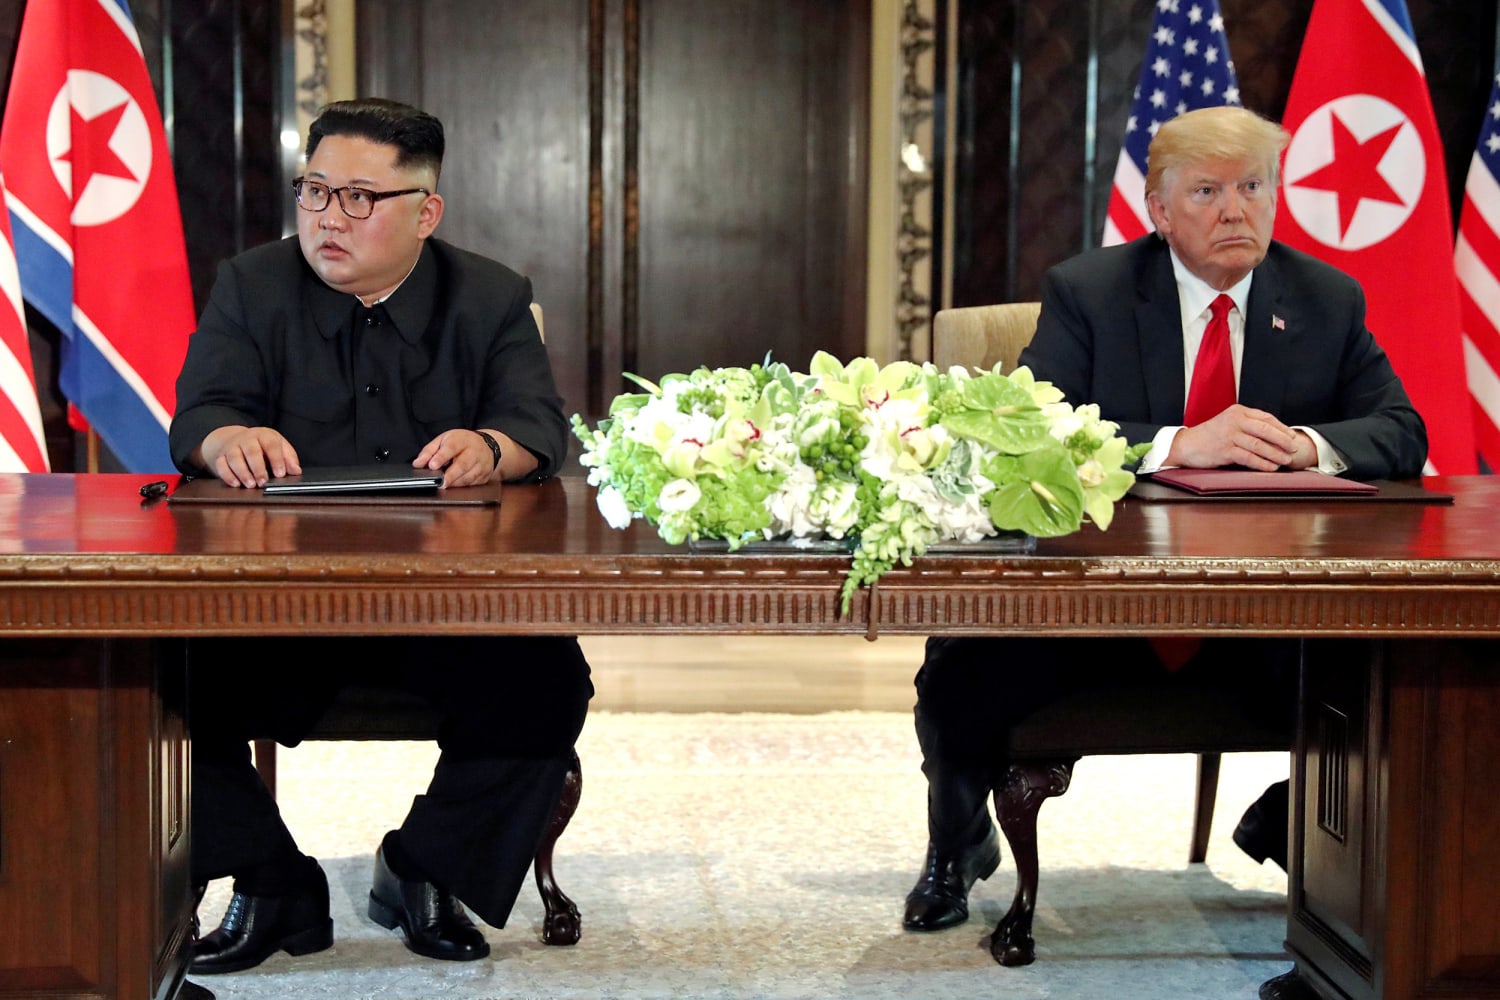 https://media-cldnry.s-nbcnews.com/image/upload/newscms/2018_32/2527376/180810-kim-jong-un-donald-trump-summit-ew-558p.jpg